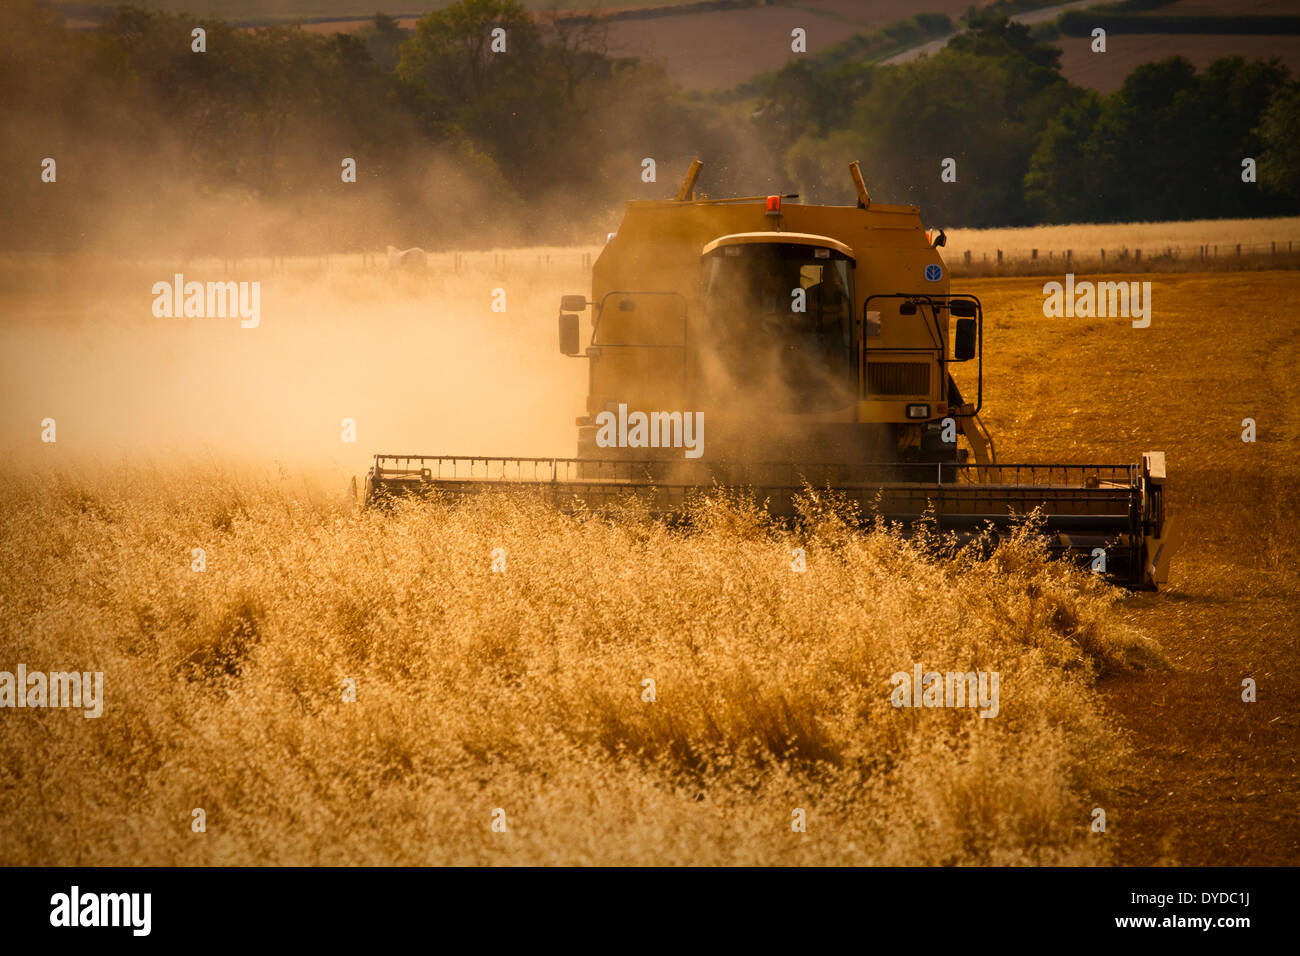 A combine harvester creates a dust cloud. Stock Photo